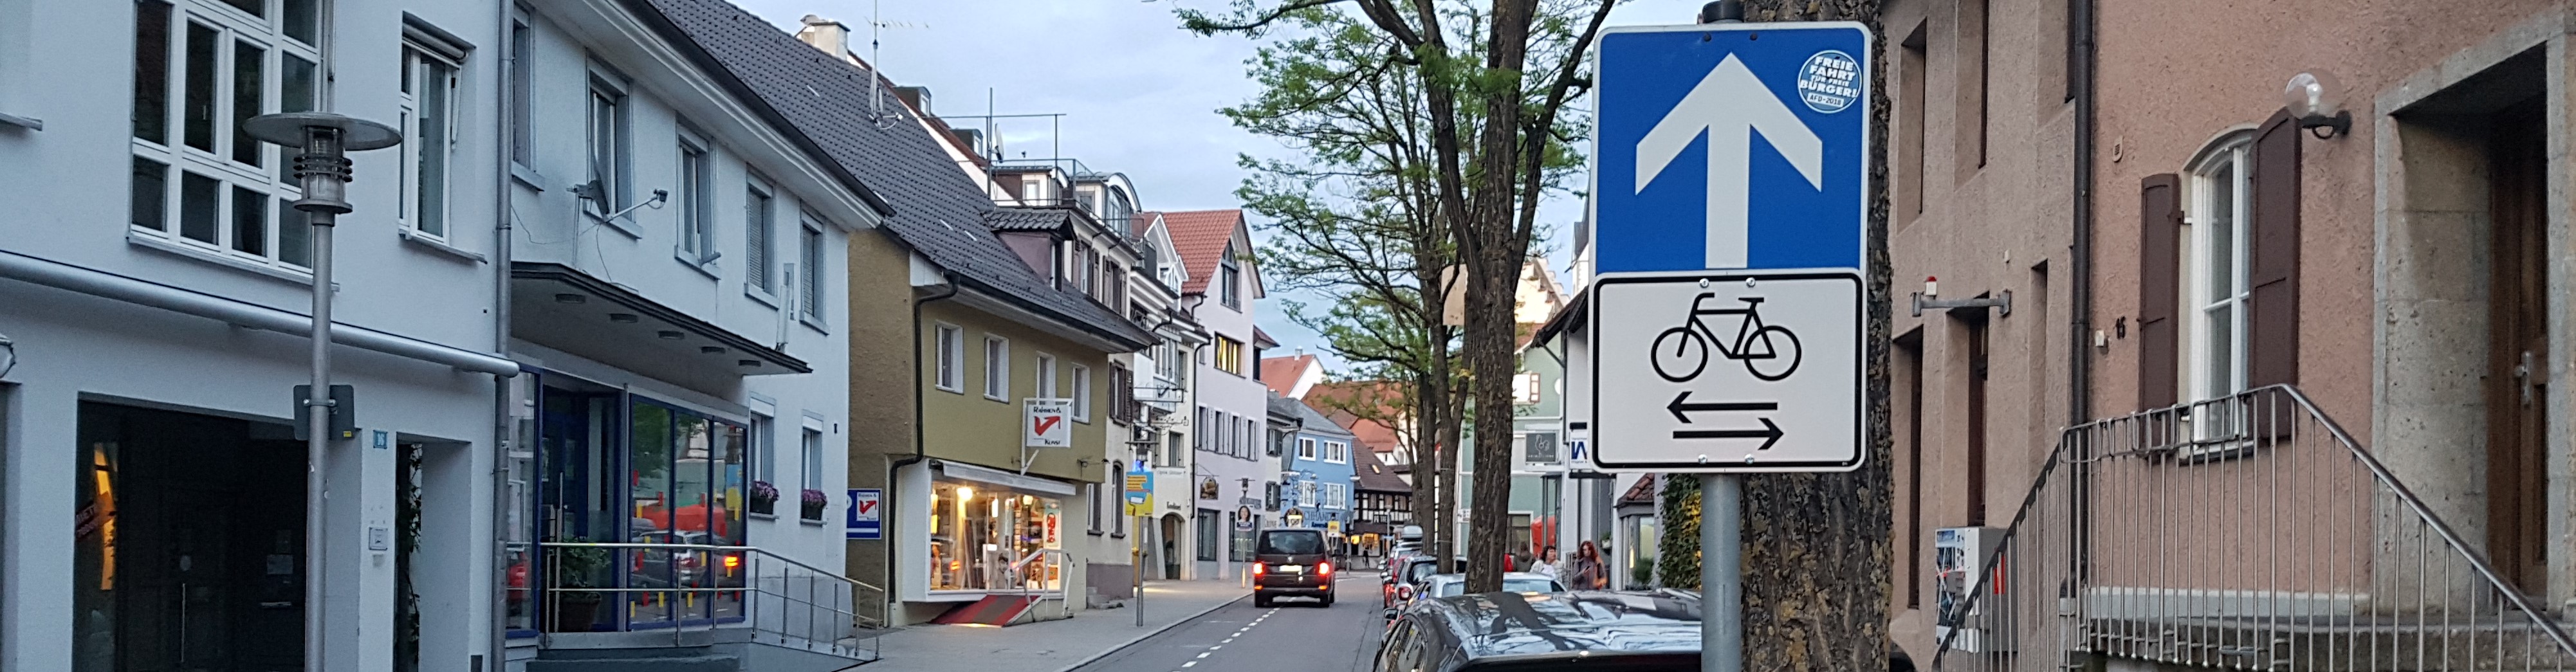 Hauptstrasse Markdorf | Bild: H. Frenzel